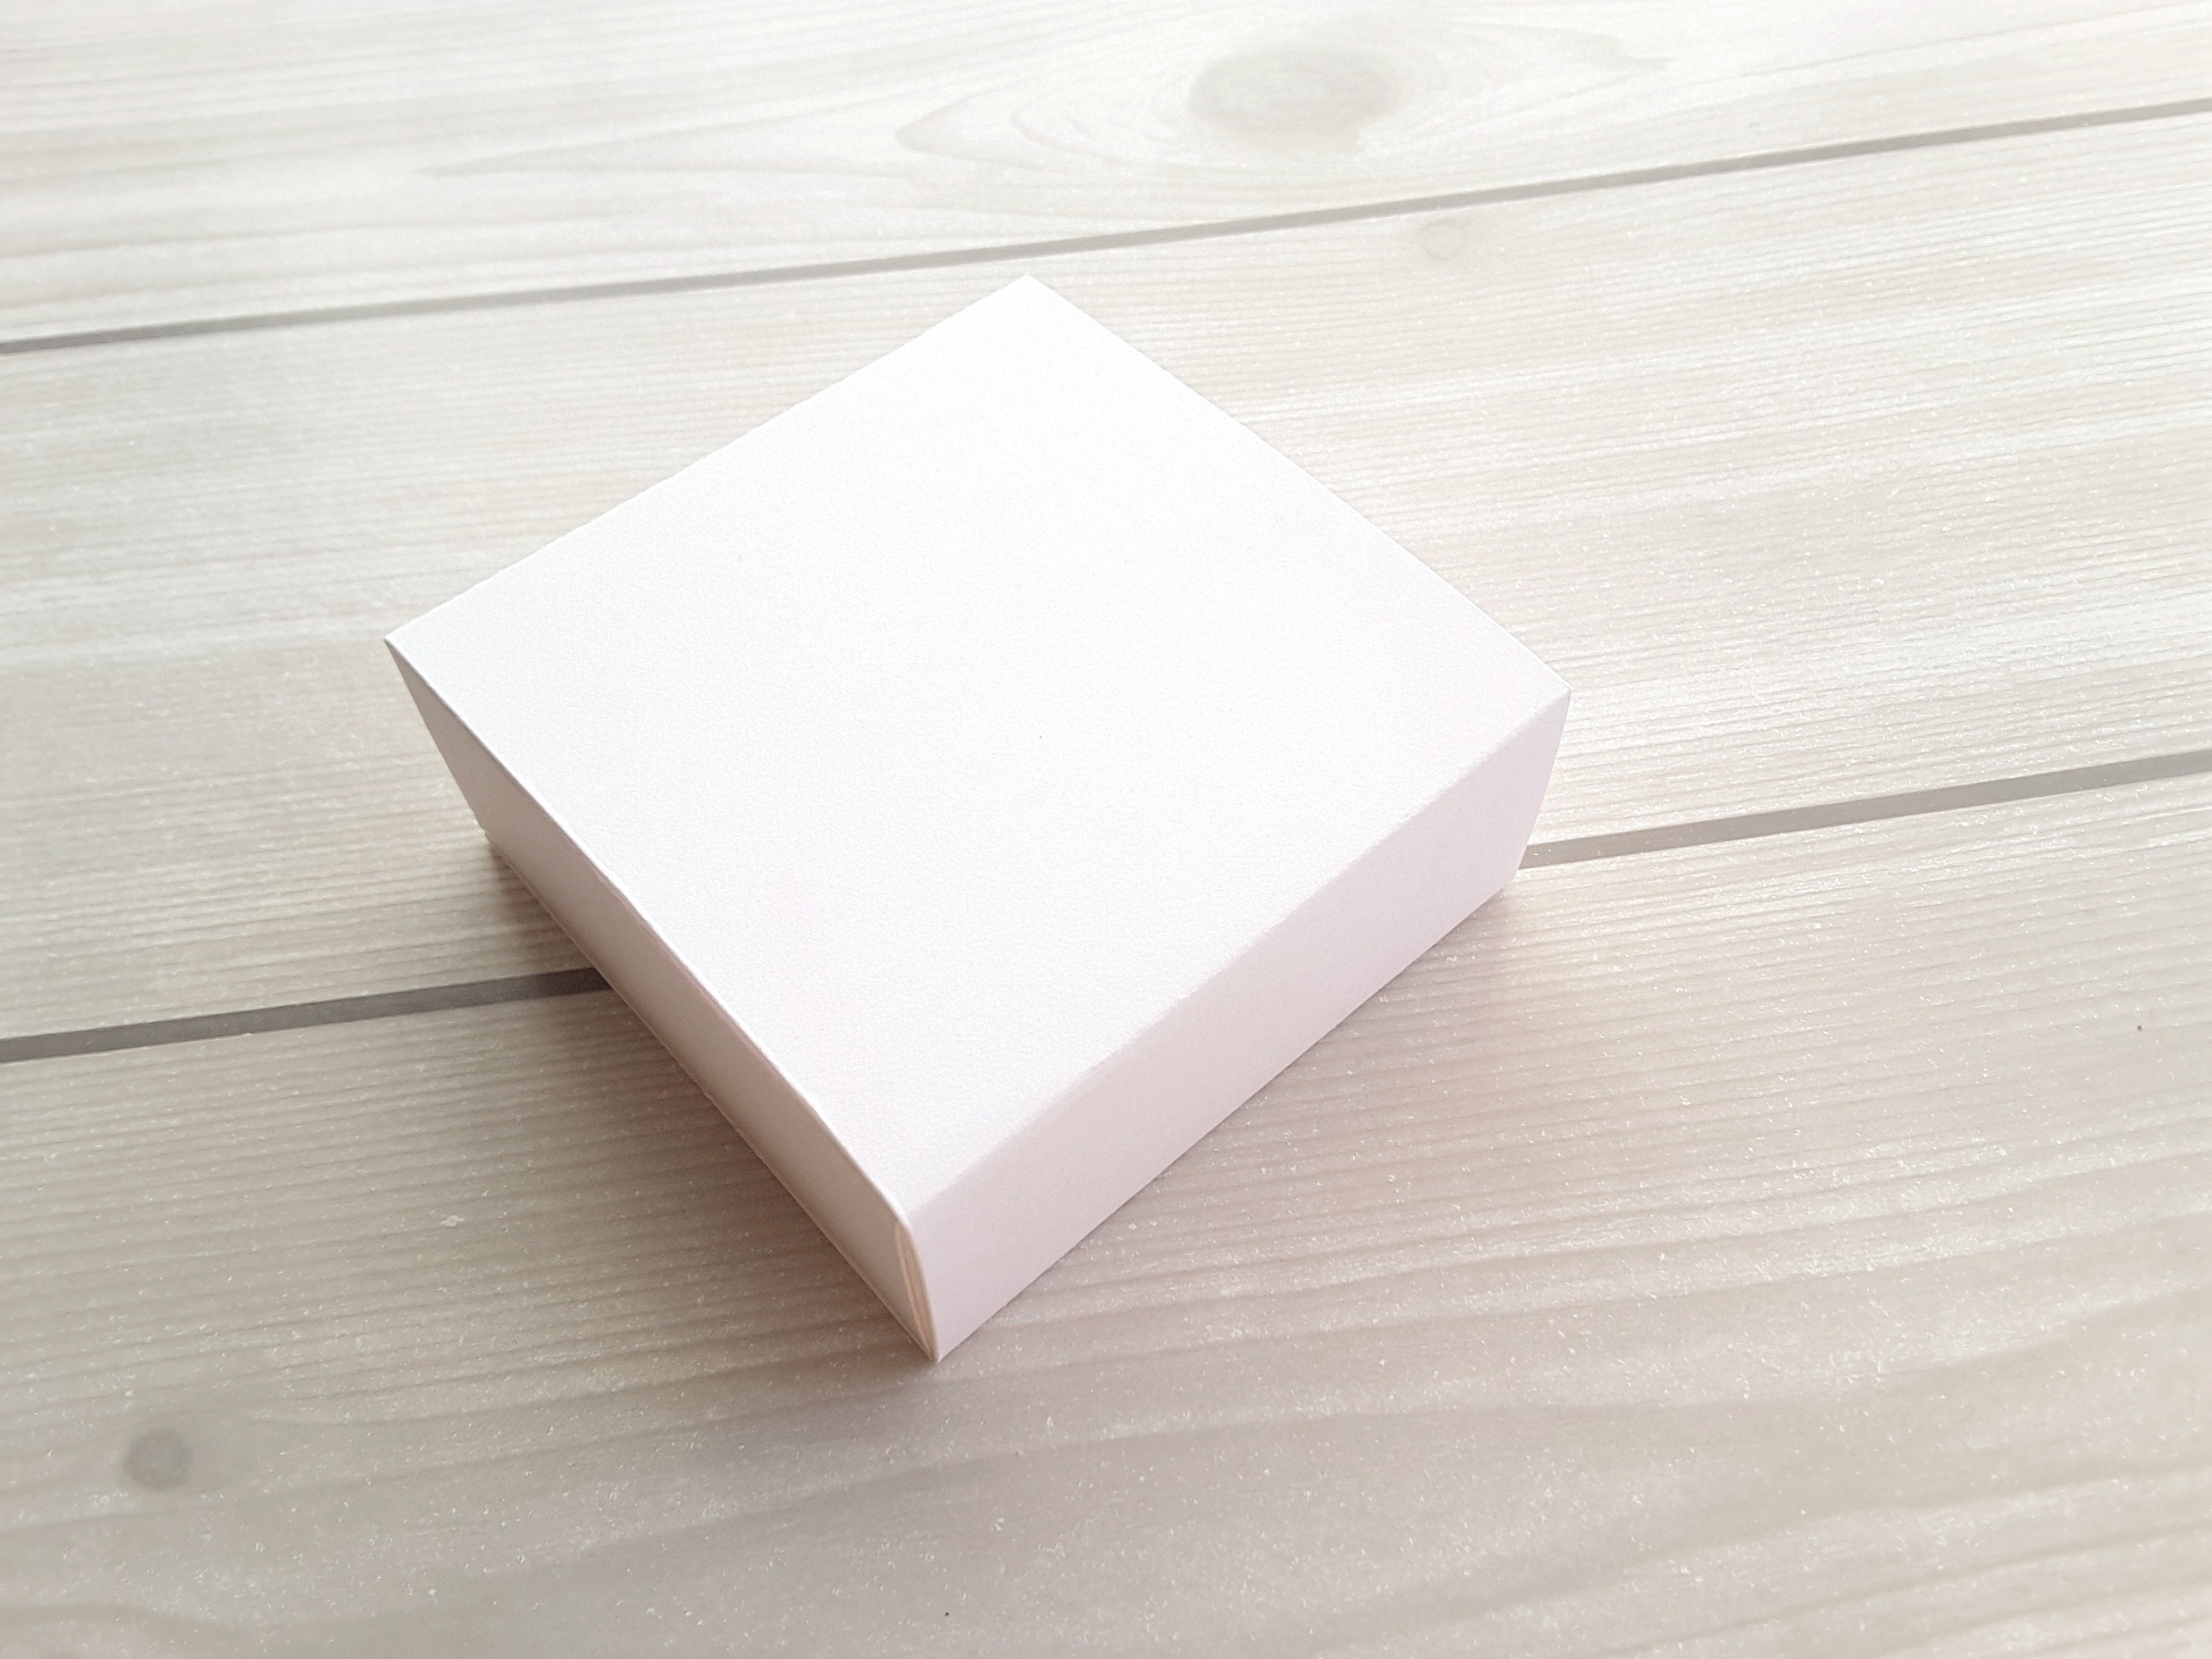 1.75 Tiny Cube Box / Holiday Gift Box / Jewelry Box / Small Treat Box /  Wedding Favors Box / Square Box / Neutral Colors / Set of 10 -  Norway